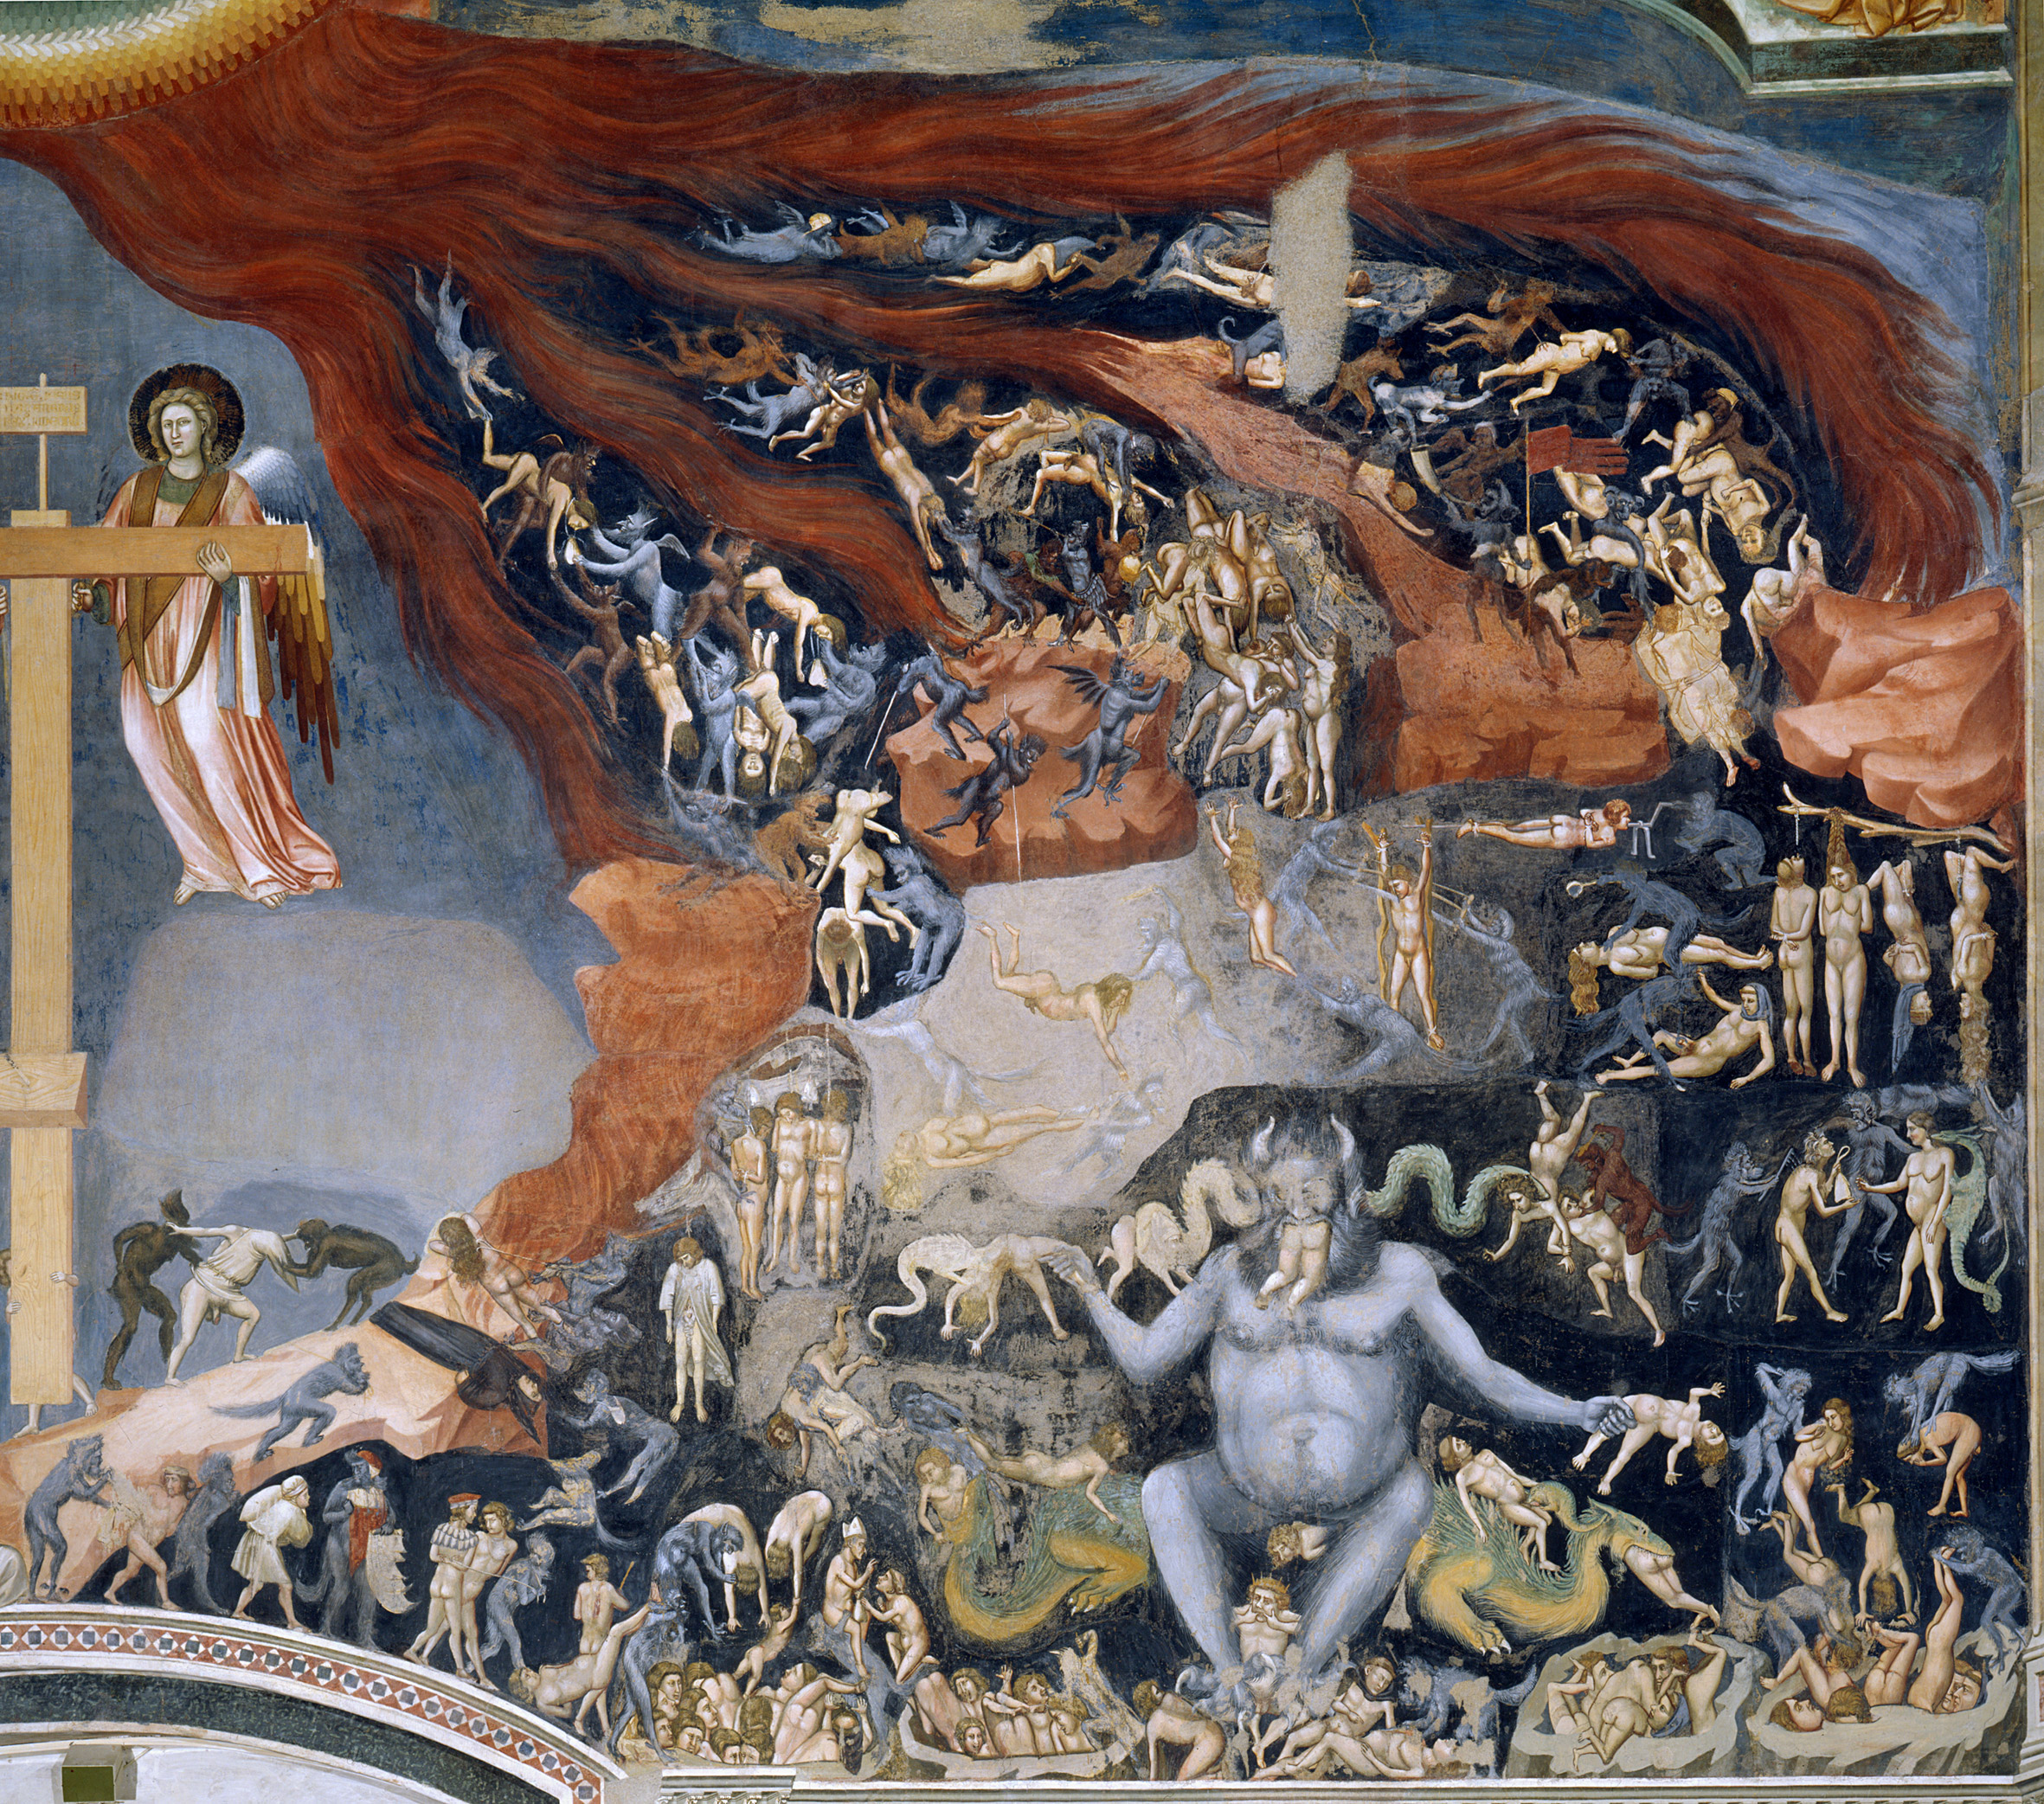 Преисподняя by Giotto di Bondone - 1305 - 1000 × 840 см 